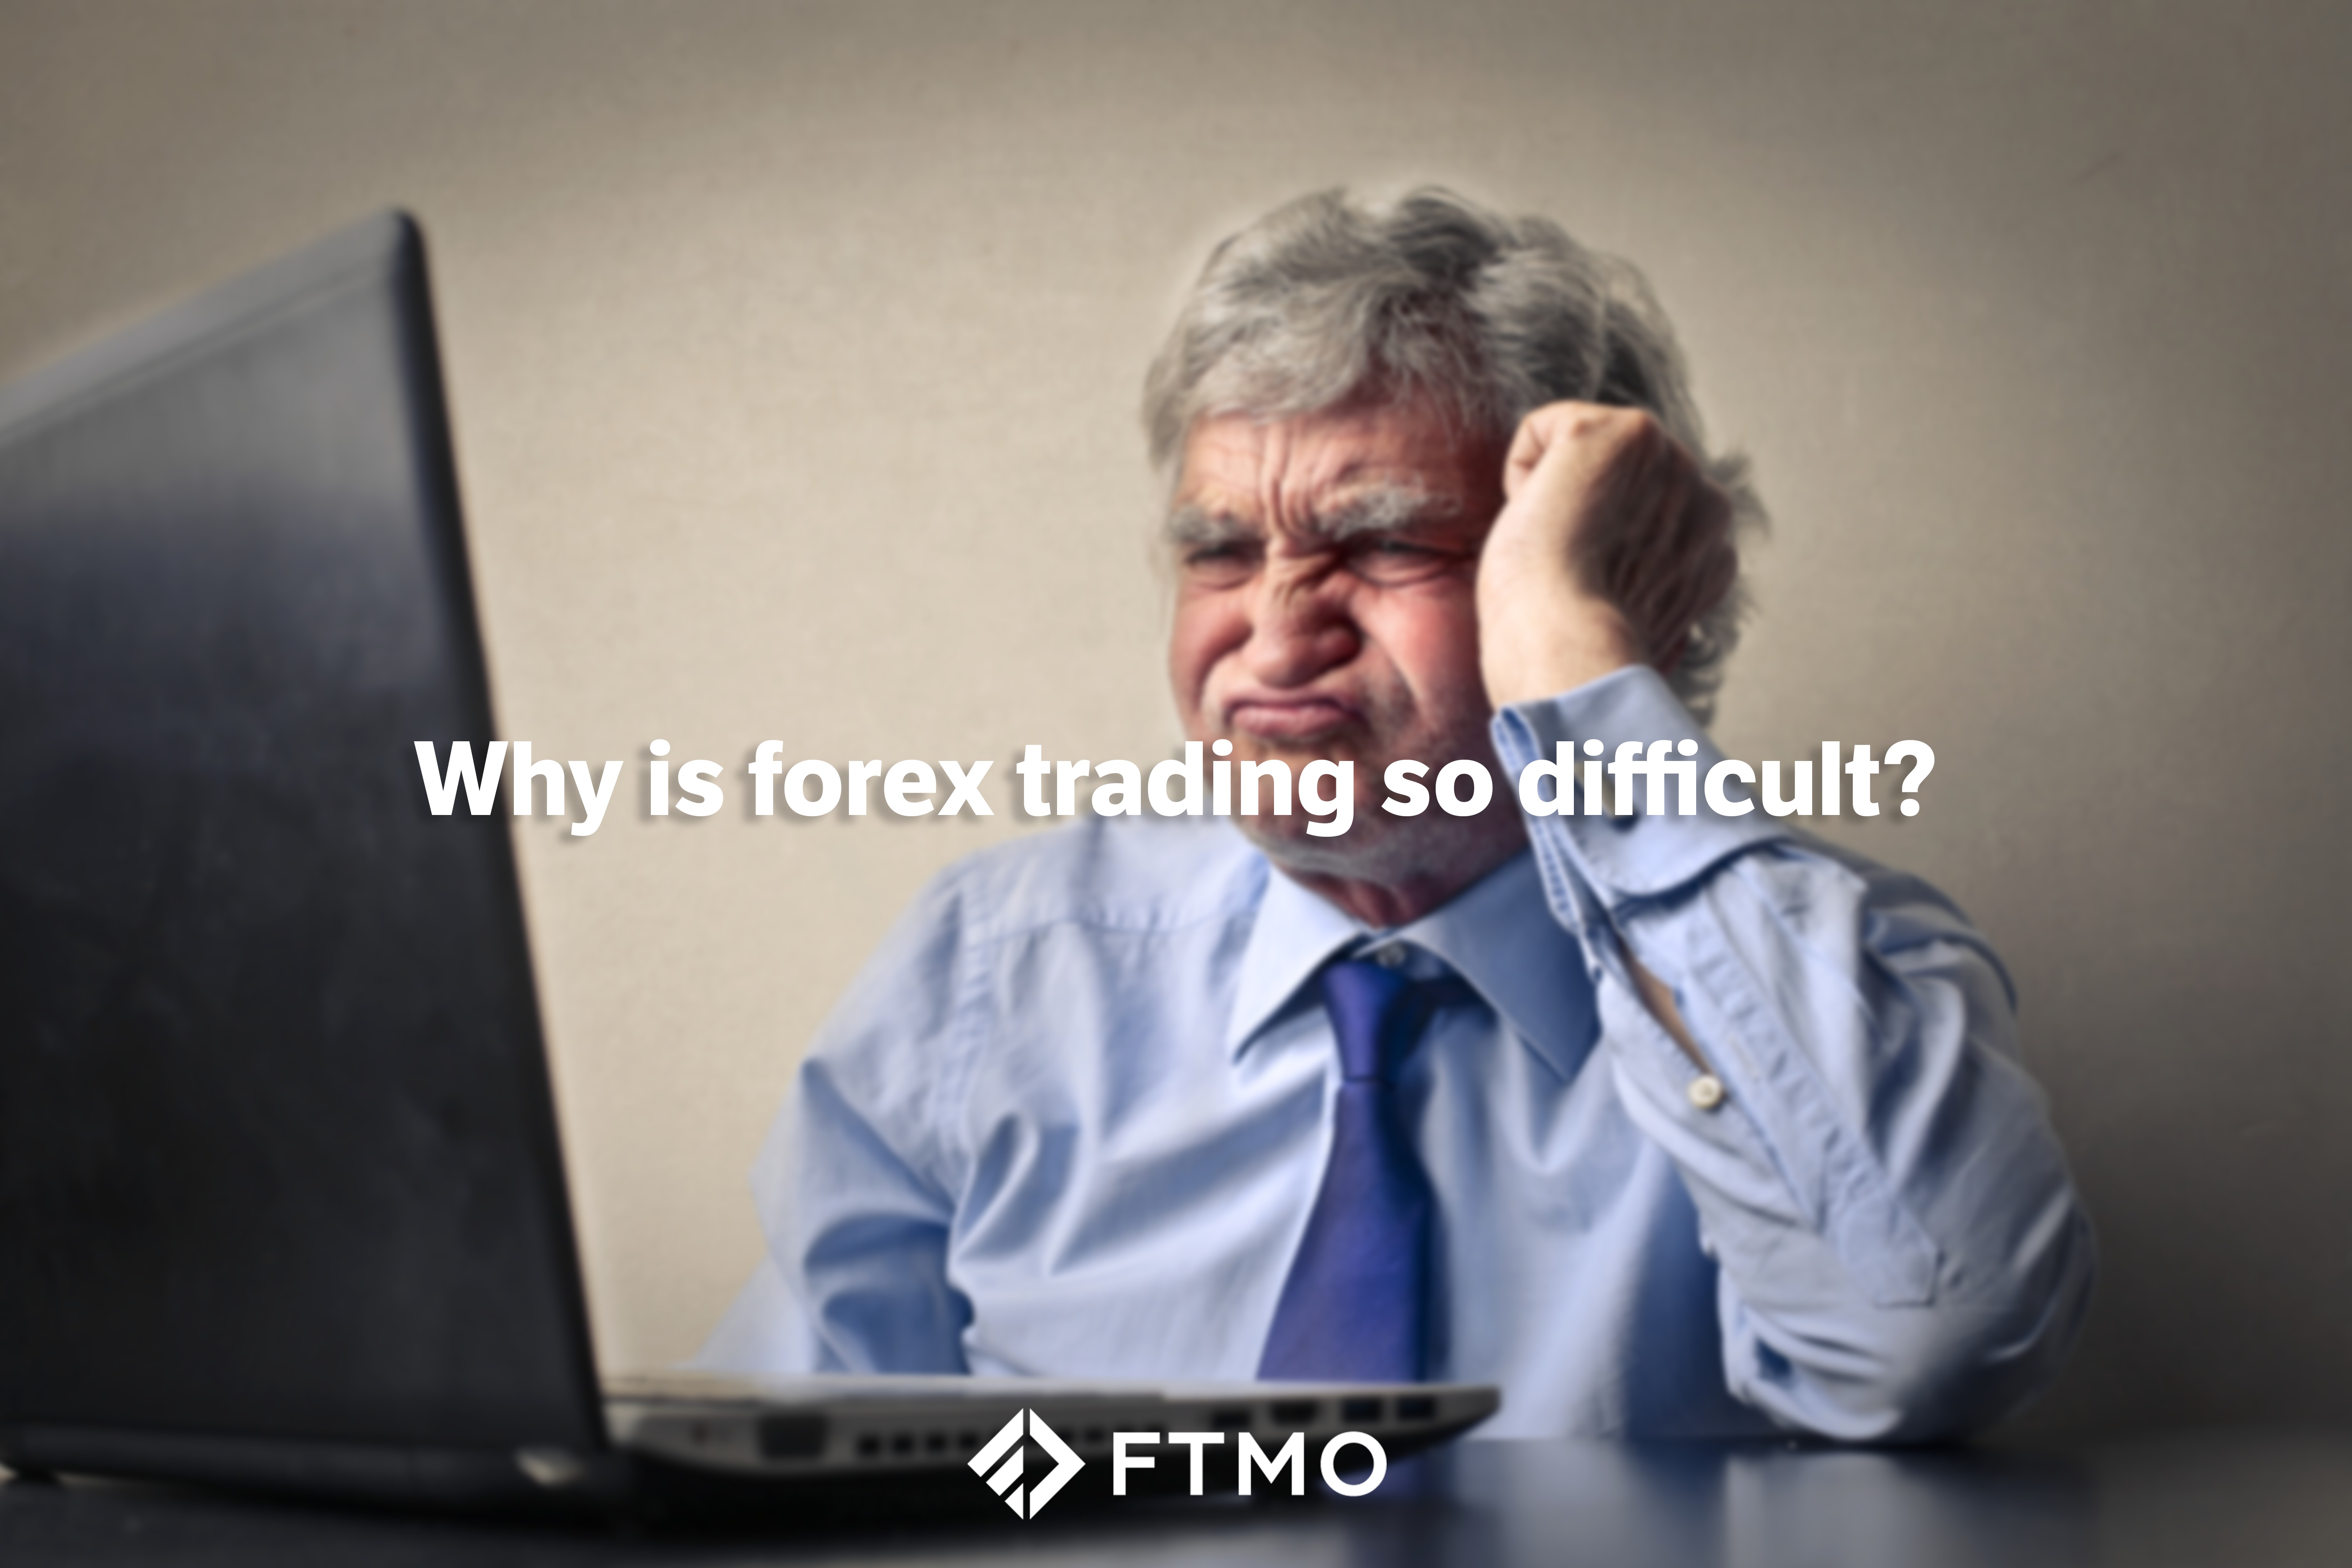 forex trading app reddit